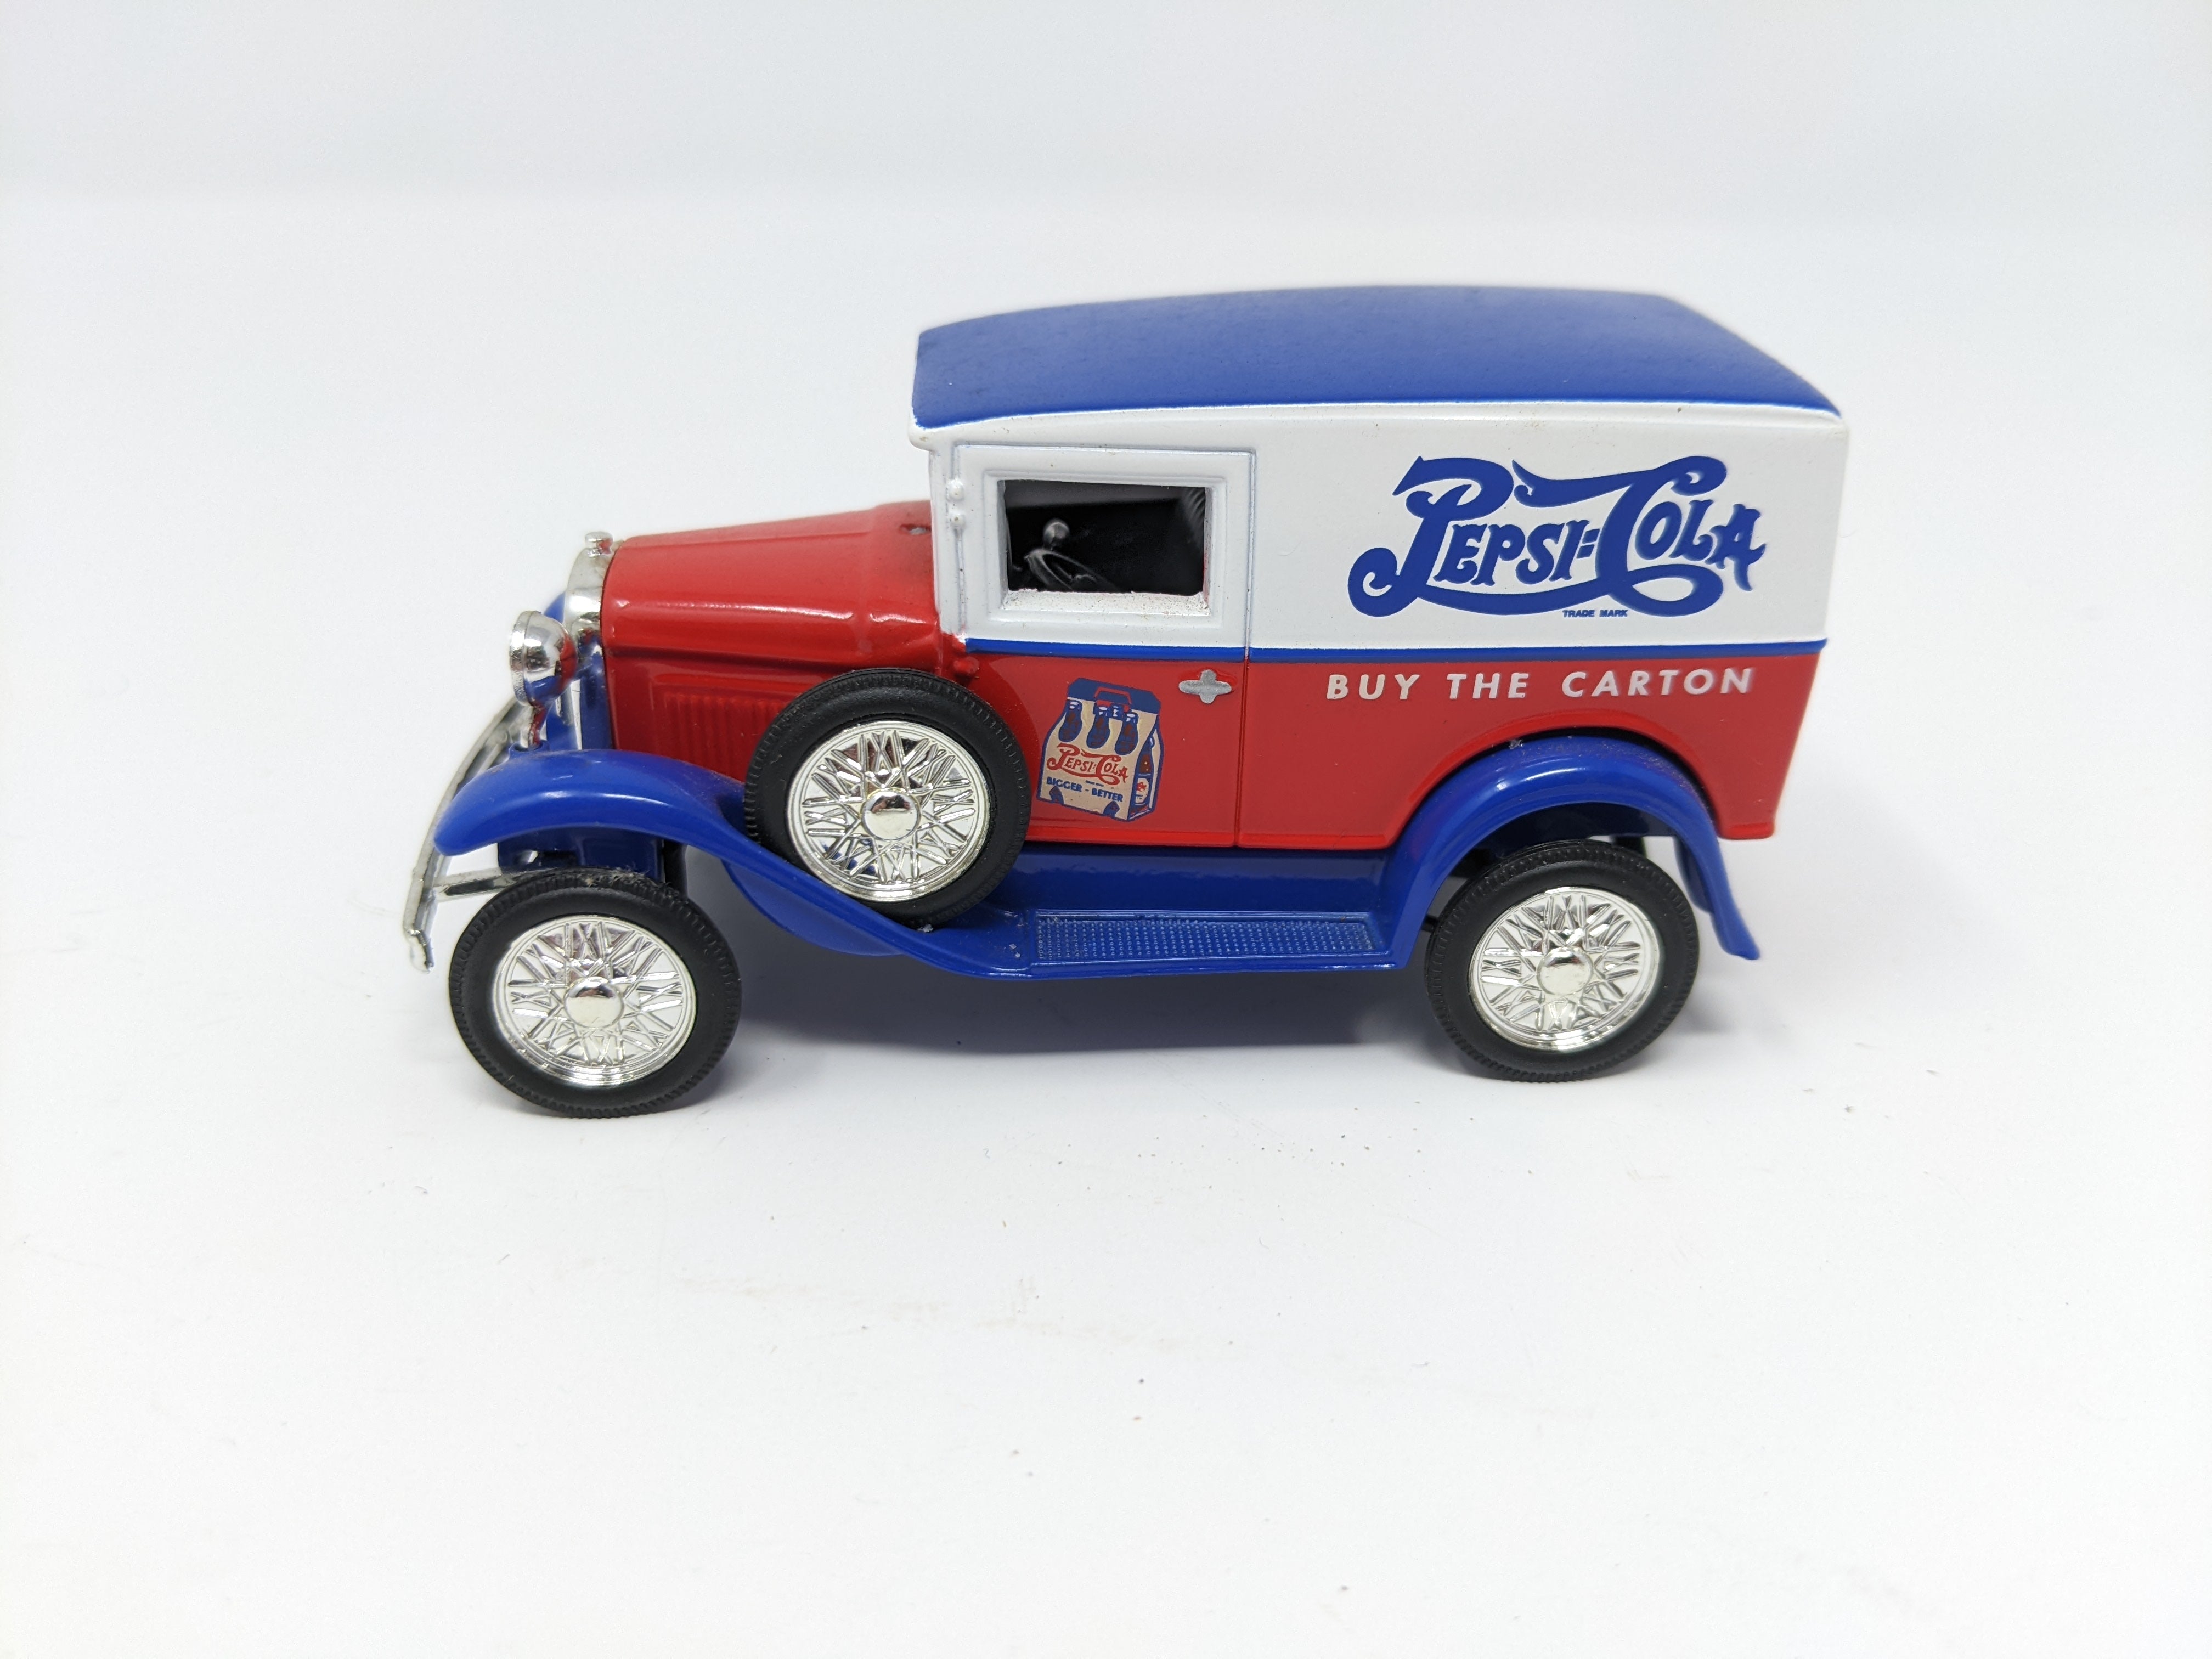 USED O Liberty Classics Ford Model A Pepsi Cola Car, Read Description